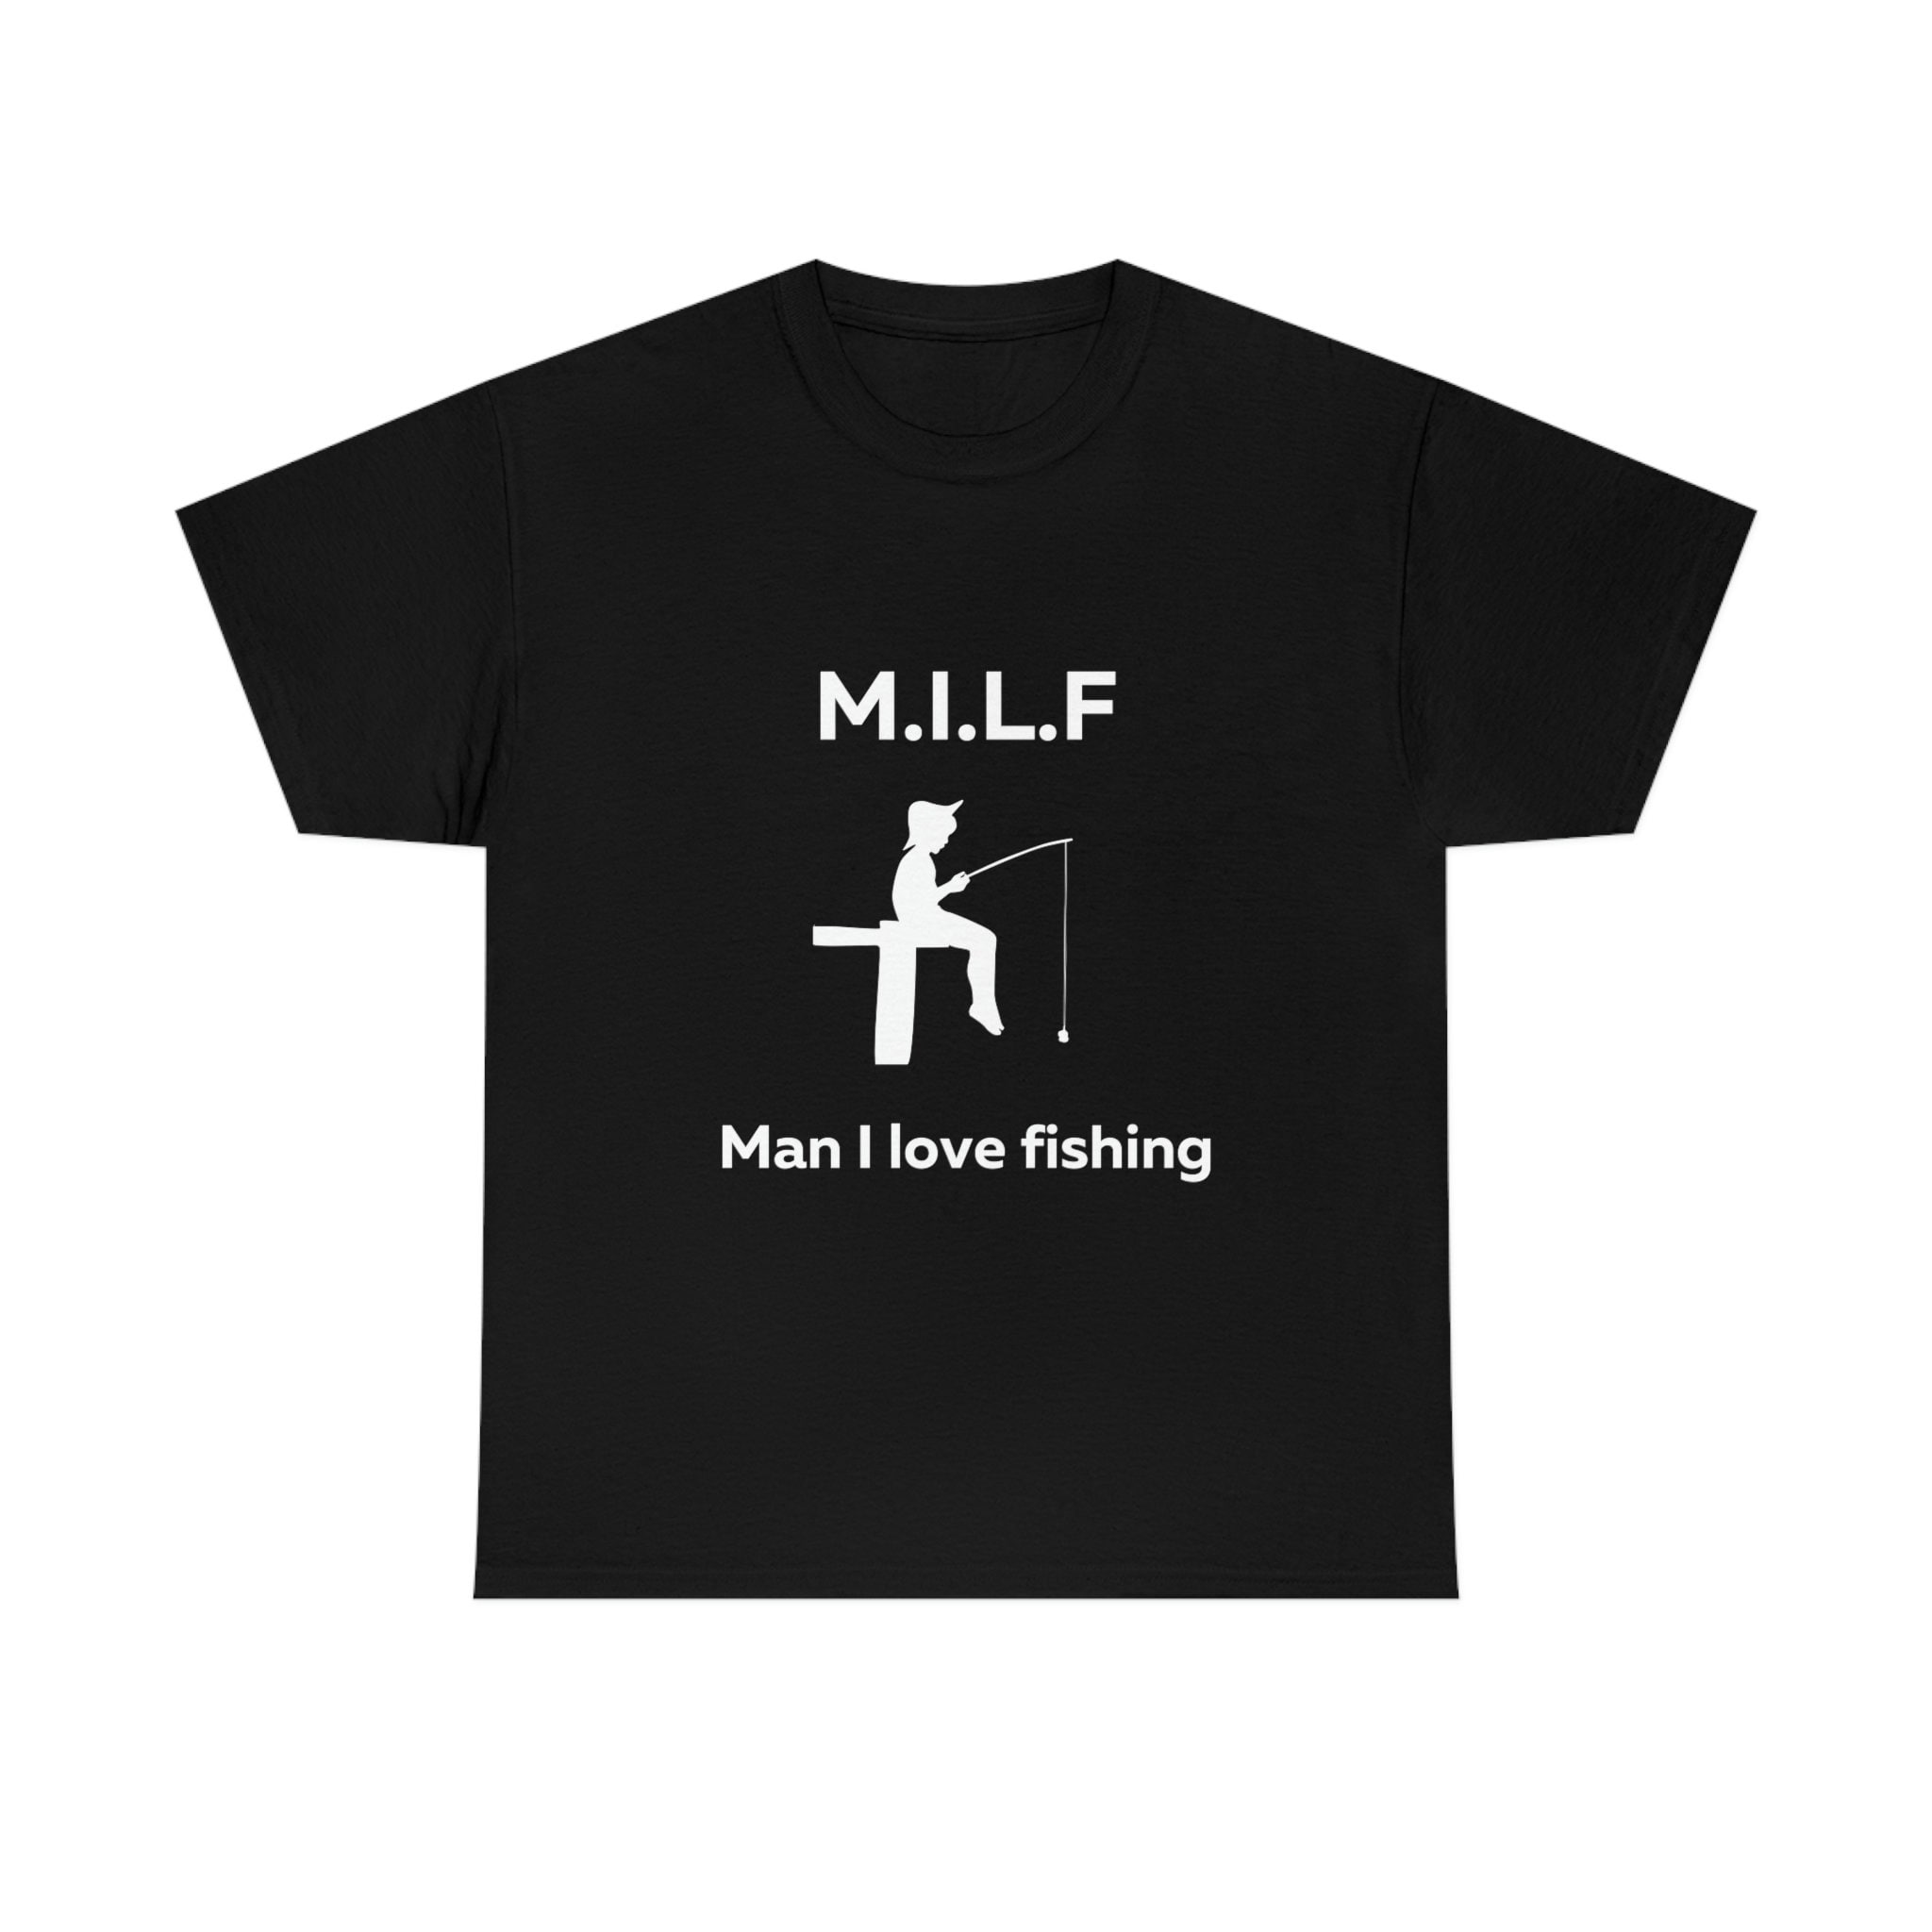 M.I.L.F T-shirt, Man I Love Fishing, Fishing T-shirt, Rizz Shirts